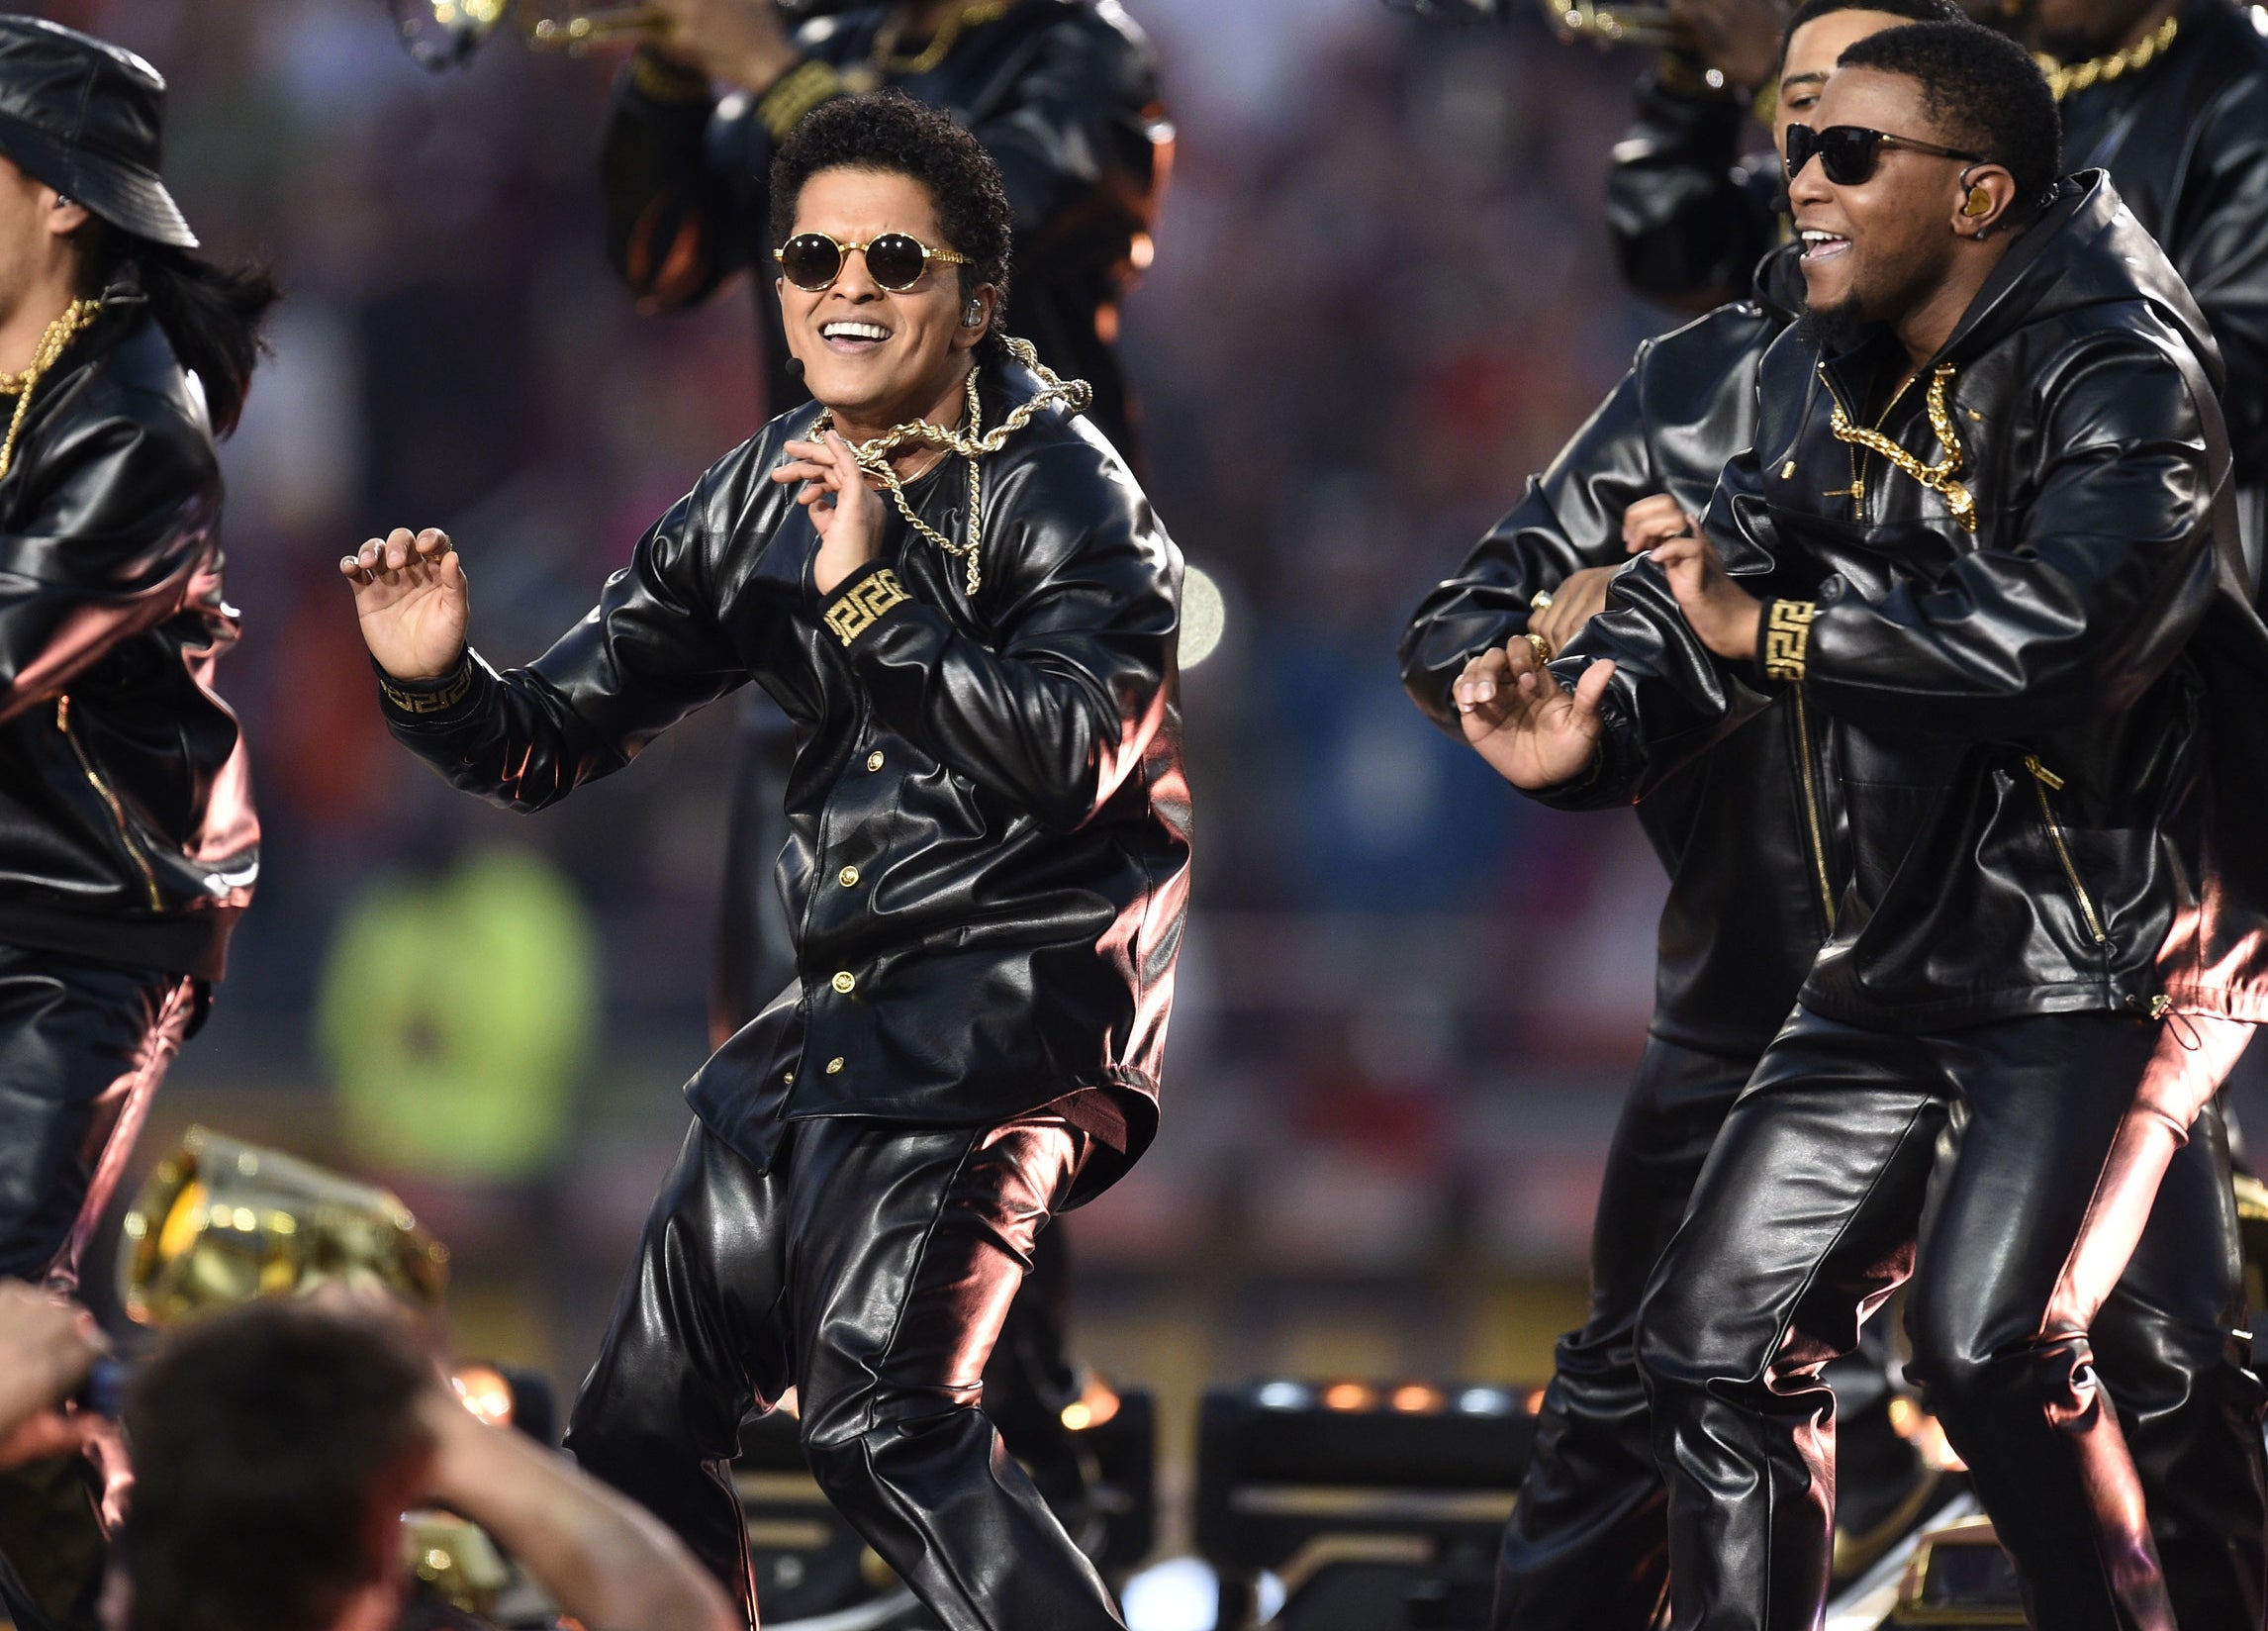 Bruno Mars, center, performs during halftime of Super Bowl 50